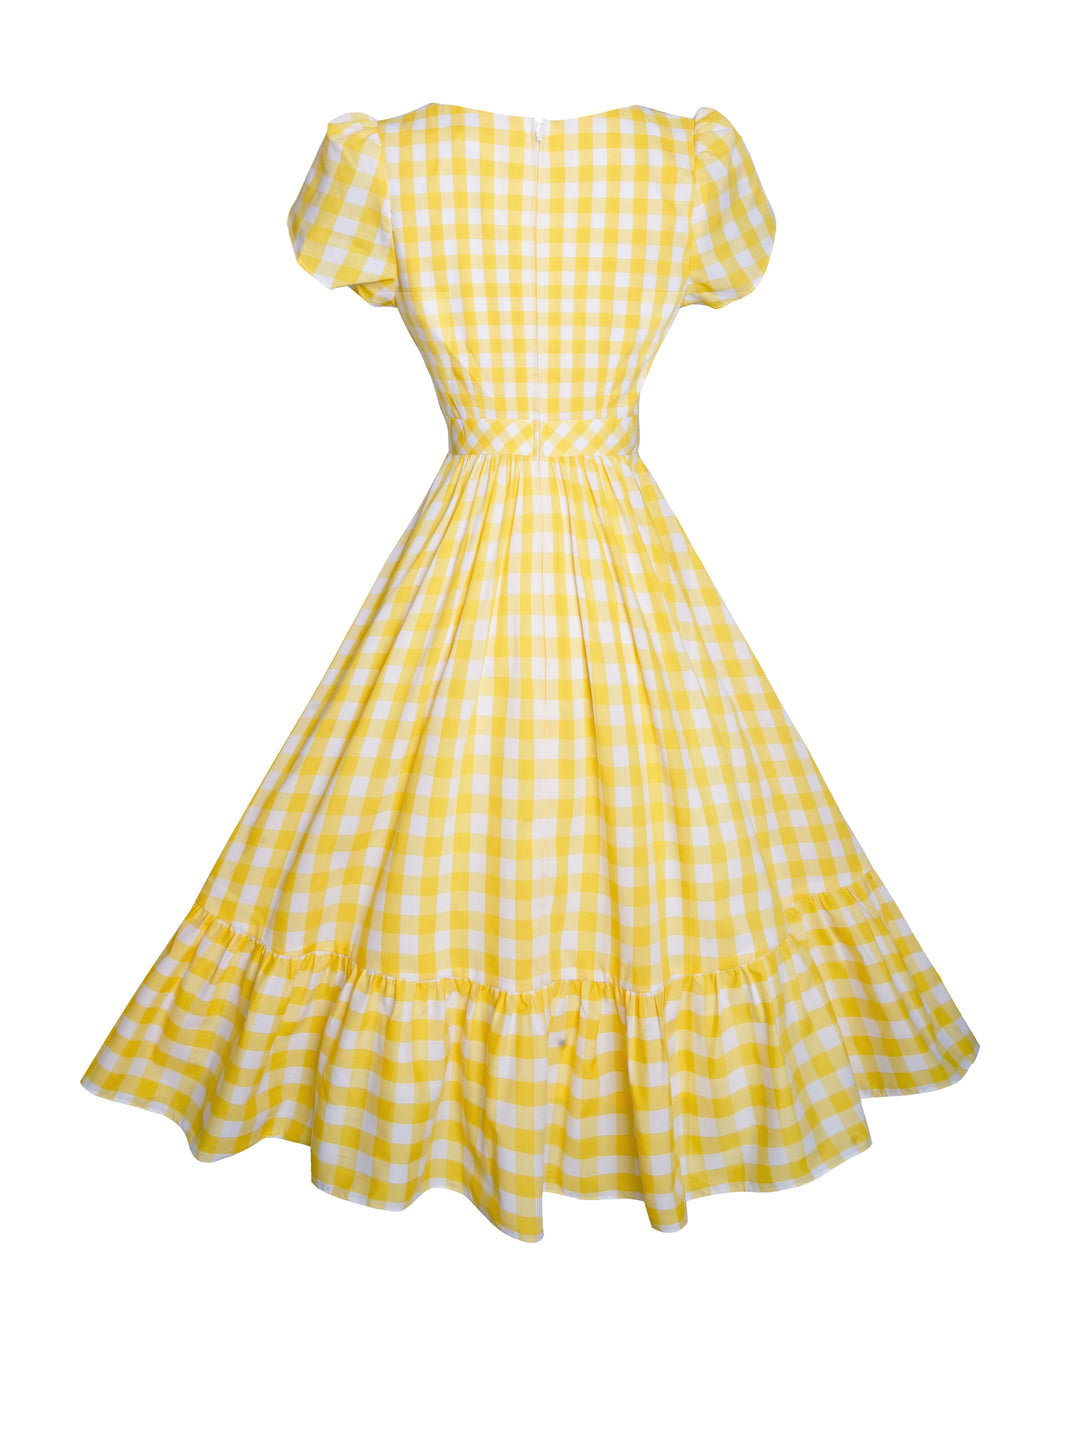 MTO - Ava Dress in Yellow Gingham - Large Checks